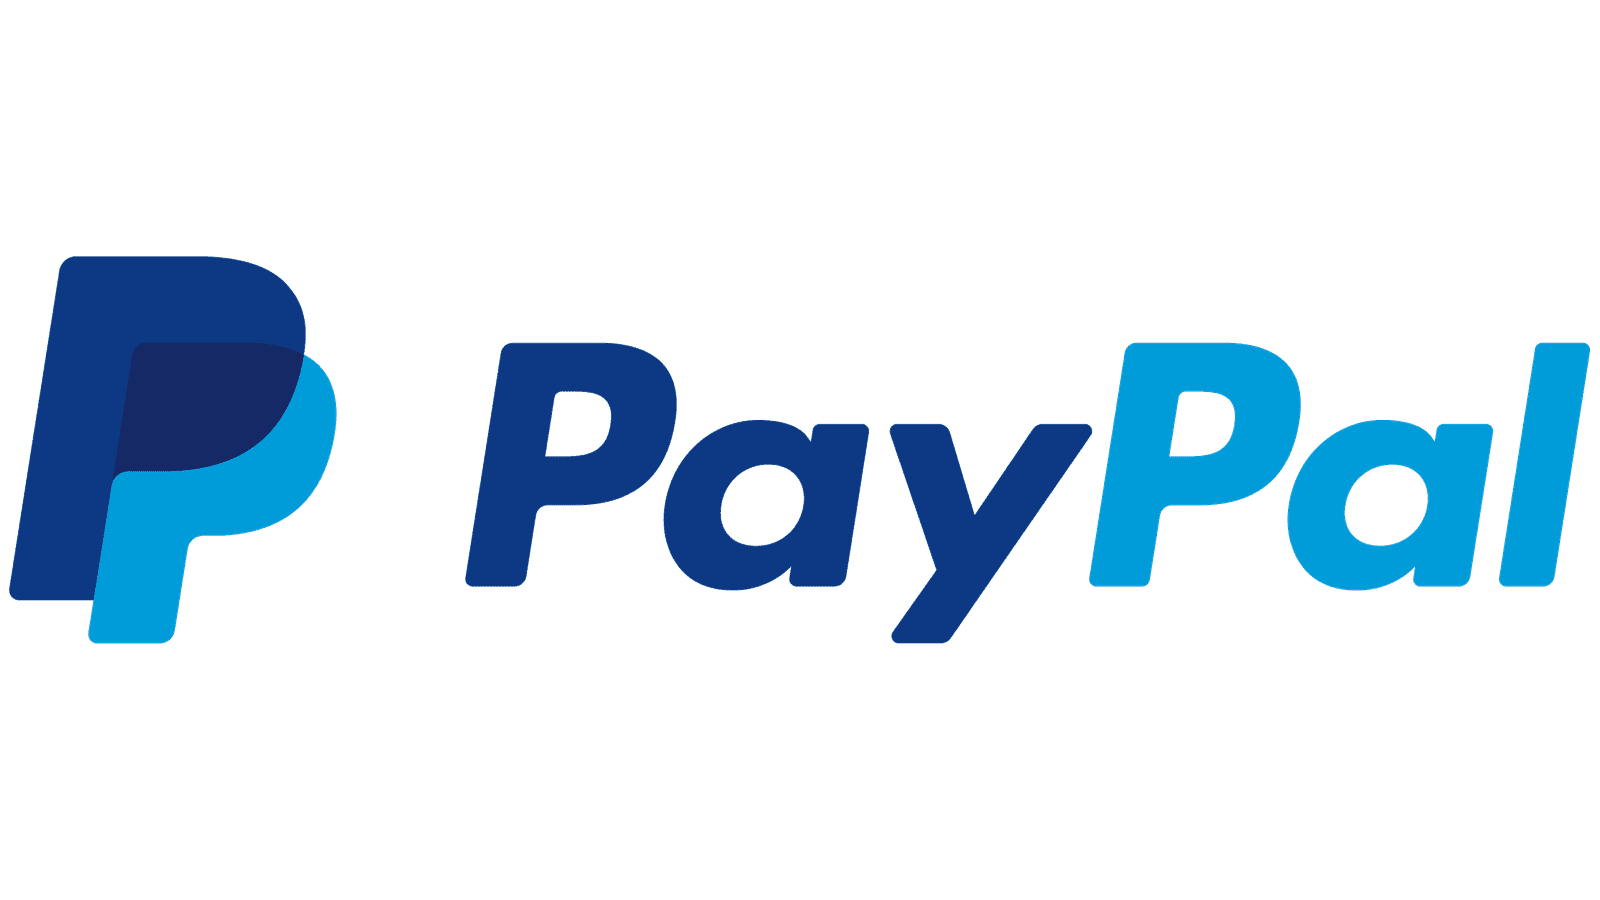 Paypal's logo